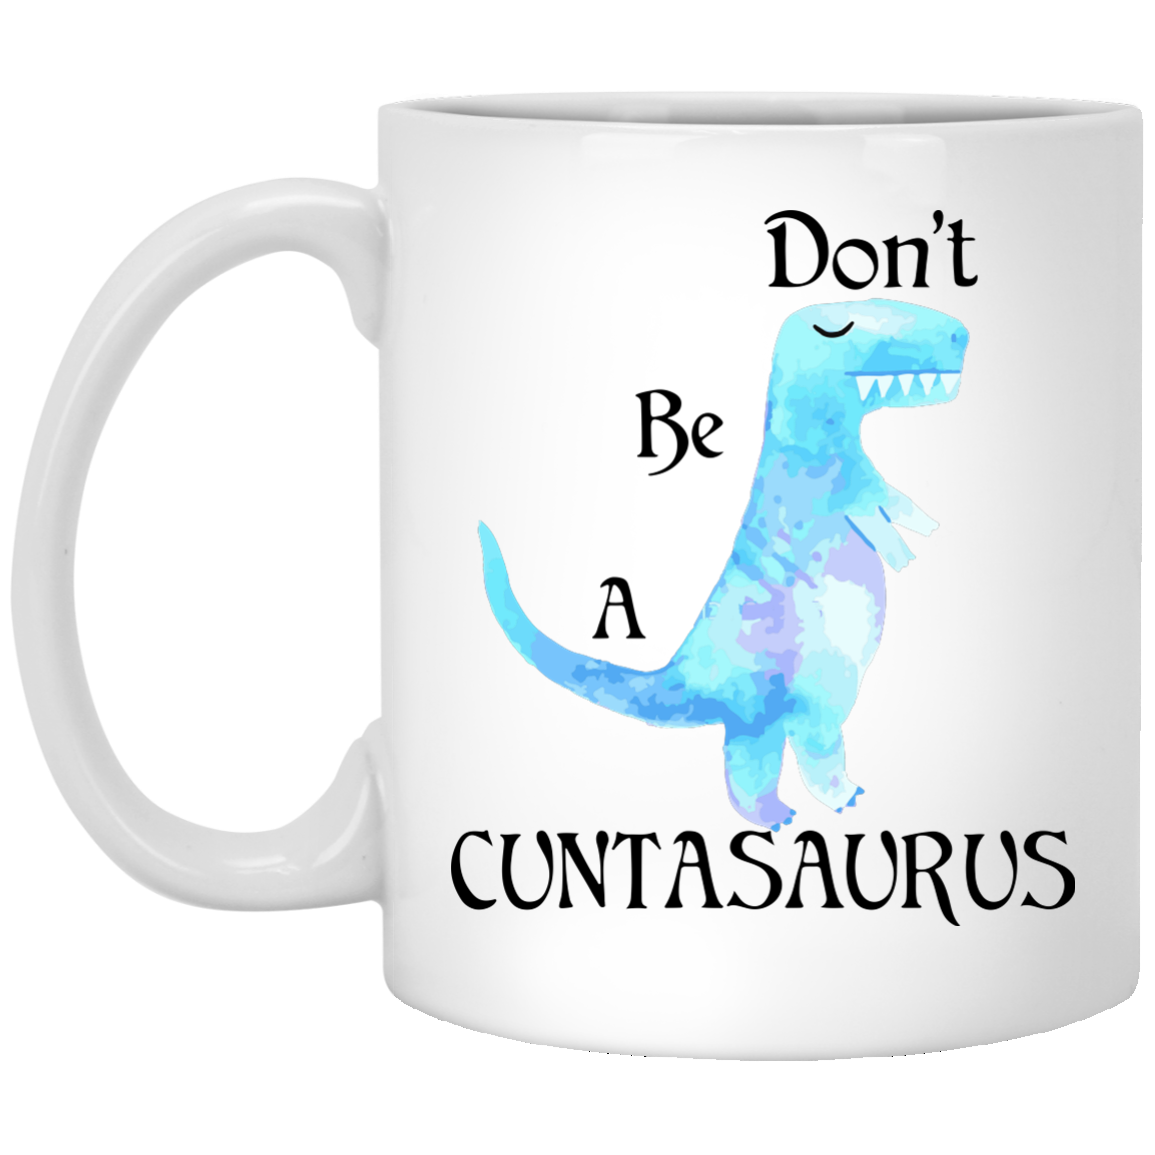 Don't be a cuntasaurus mug